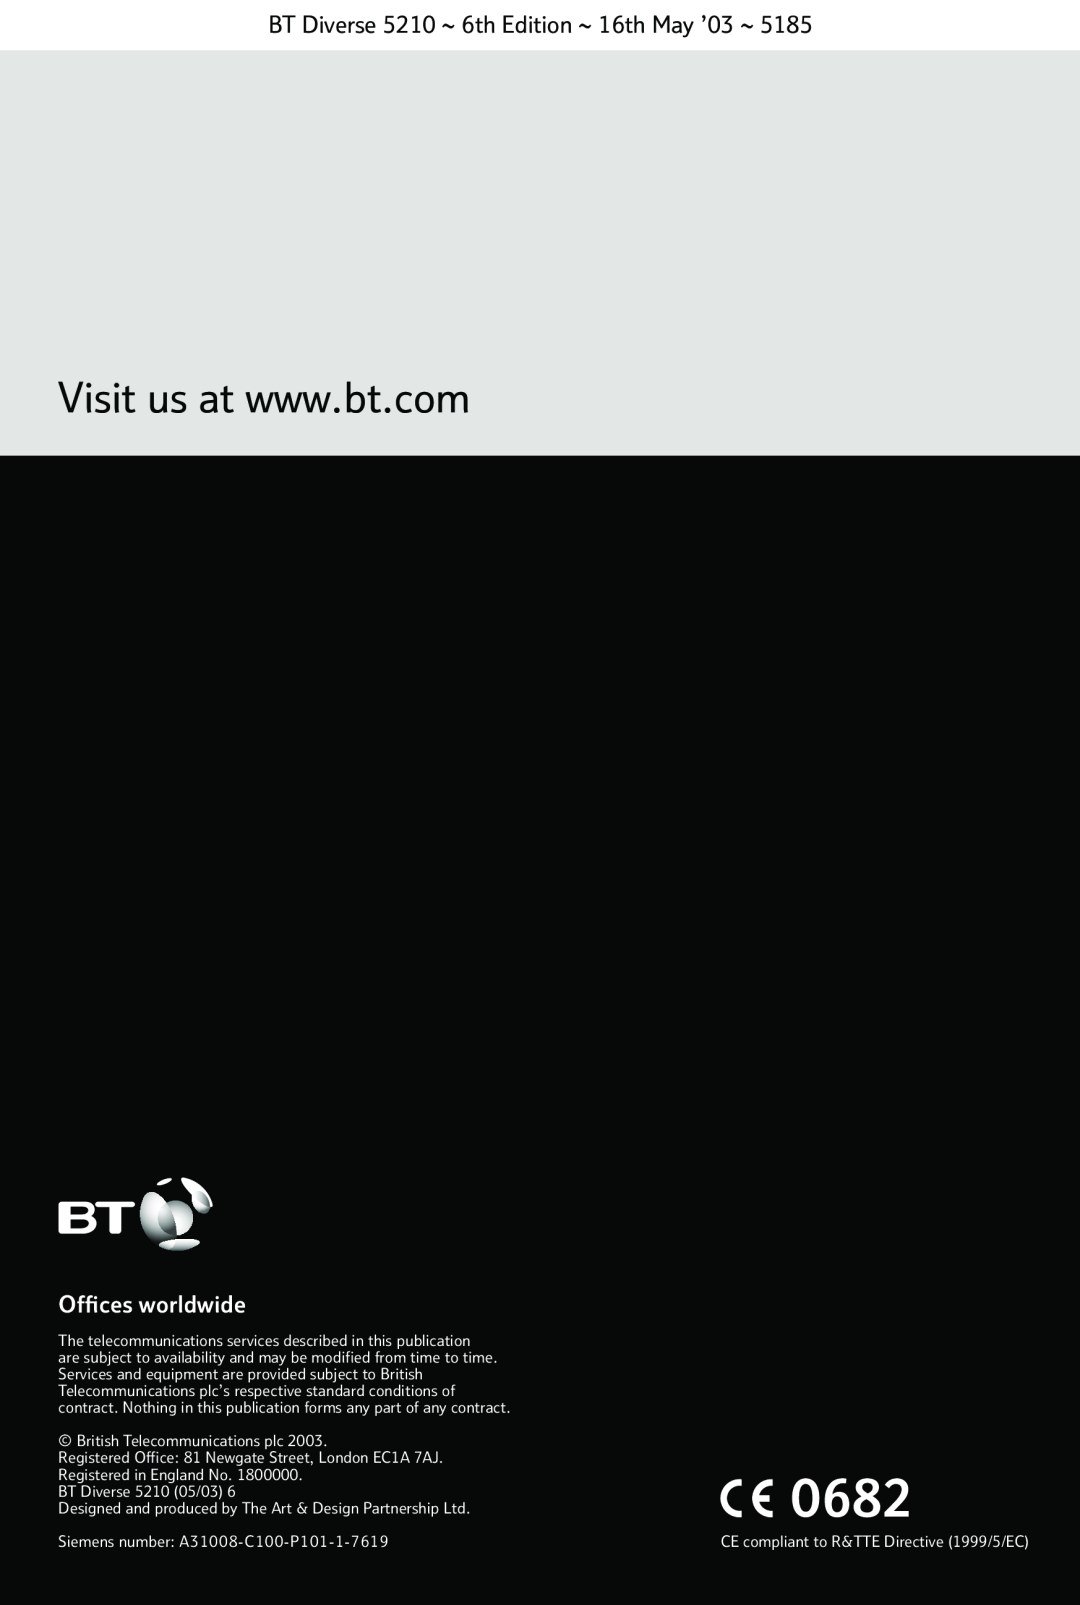 BT 5210 manual Ofﬁces worldwide, British Telecommunications plc, Registered Ofﬁce 81 Newgate Street, London EC1A 7AJ 